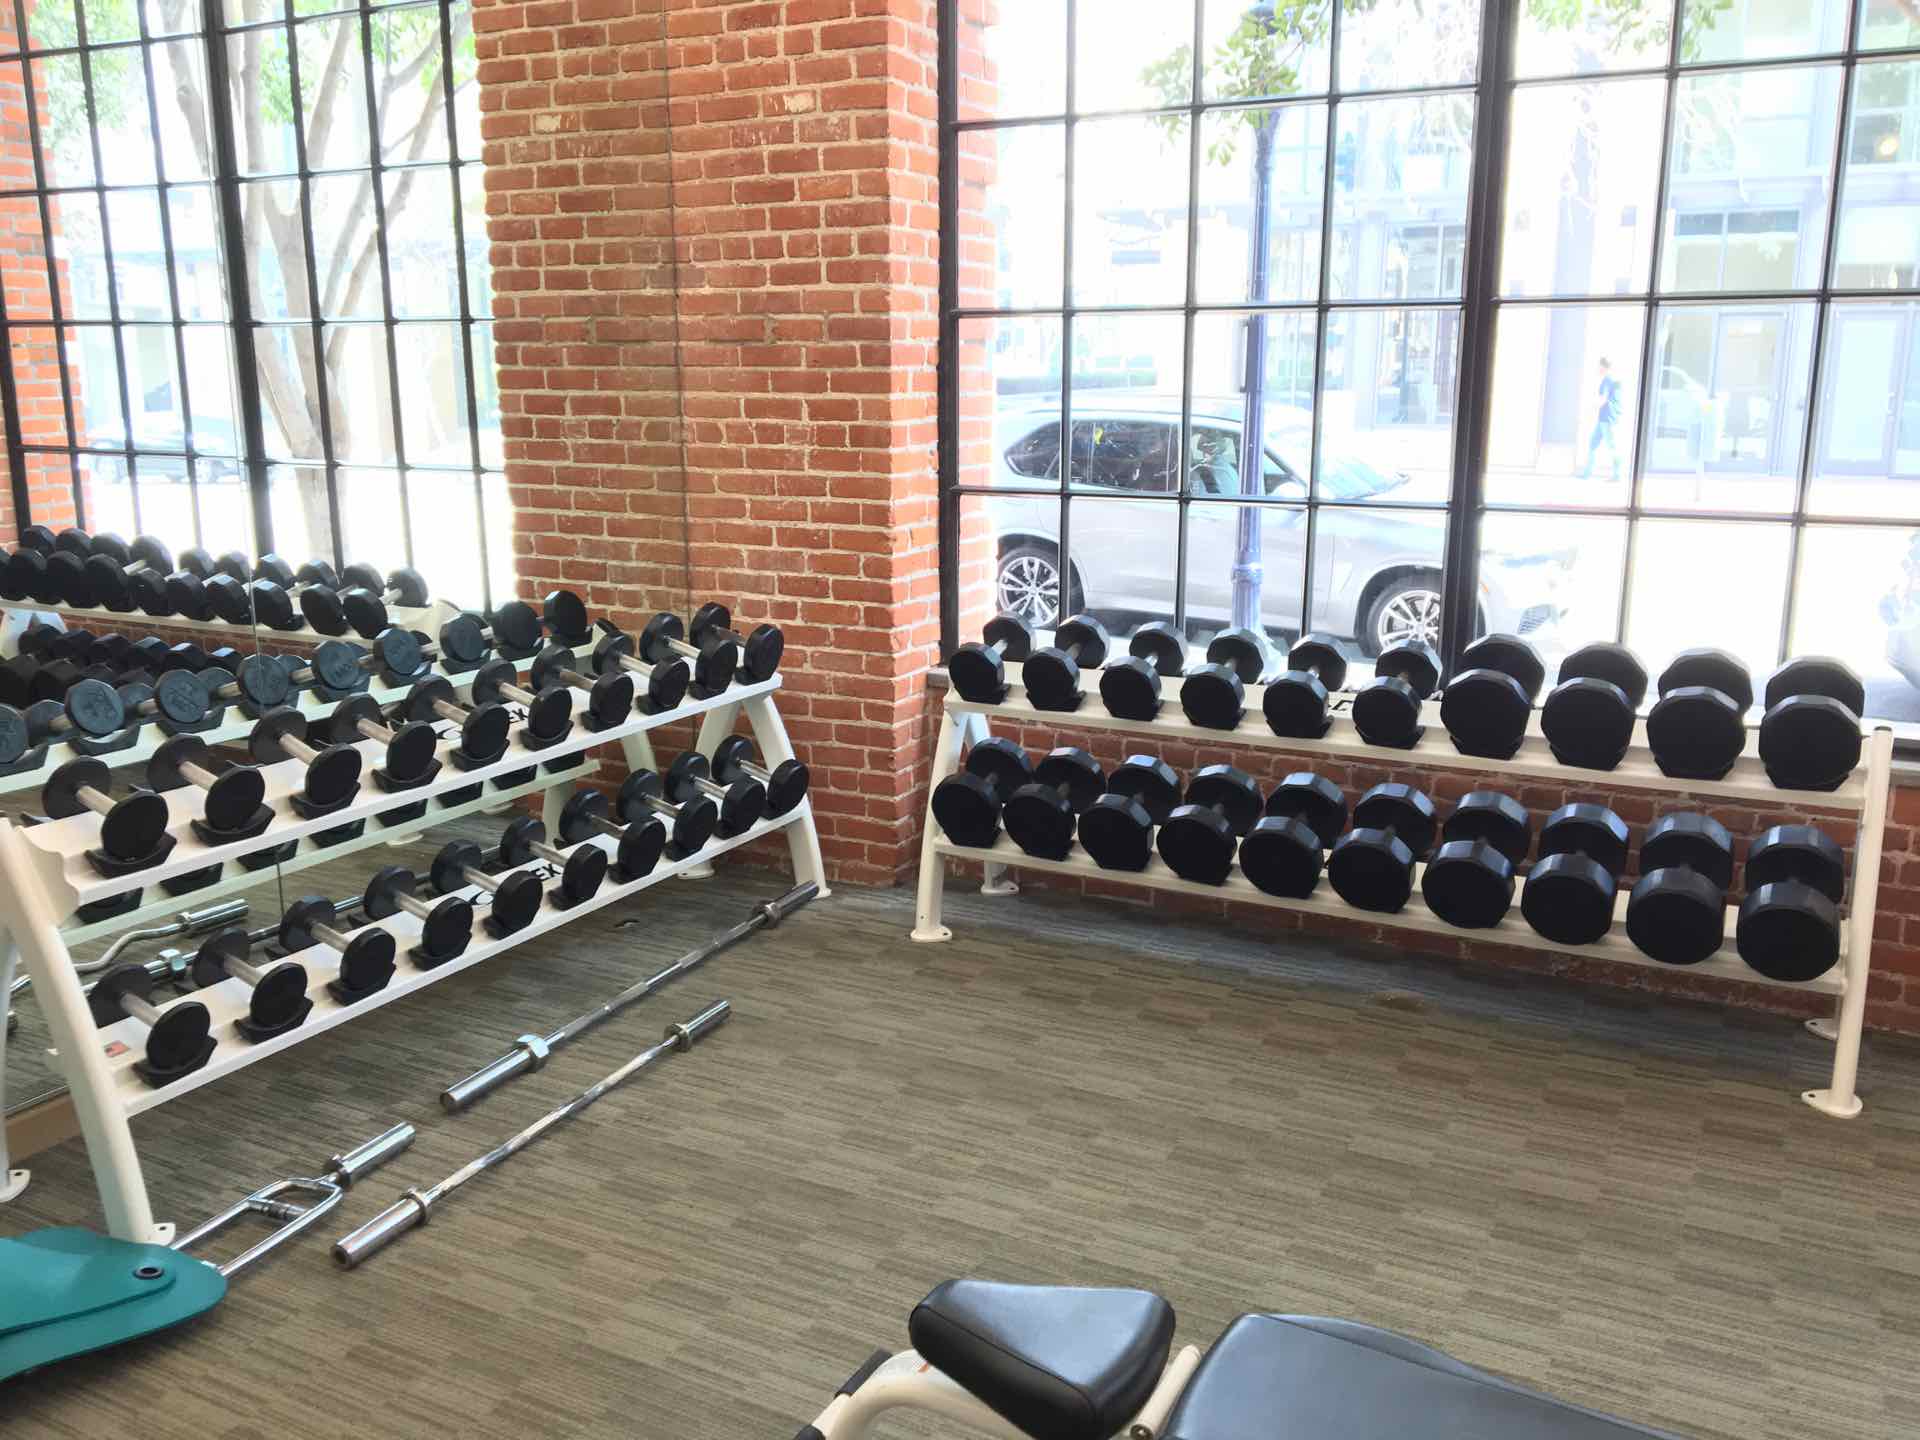 Fitness Center weight training equipment